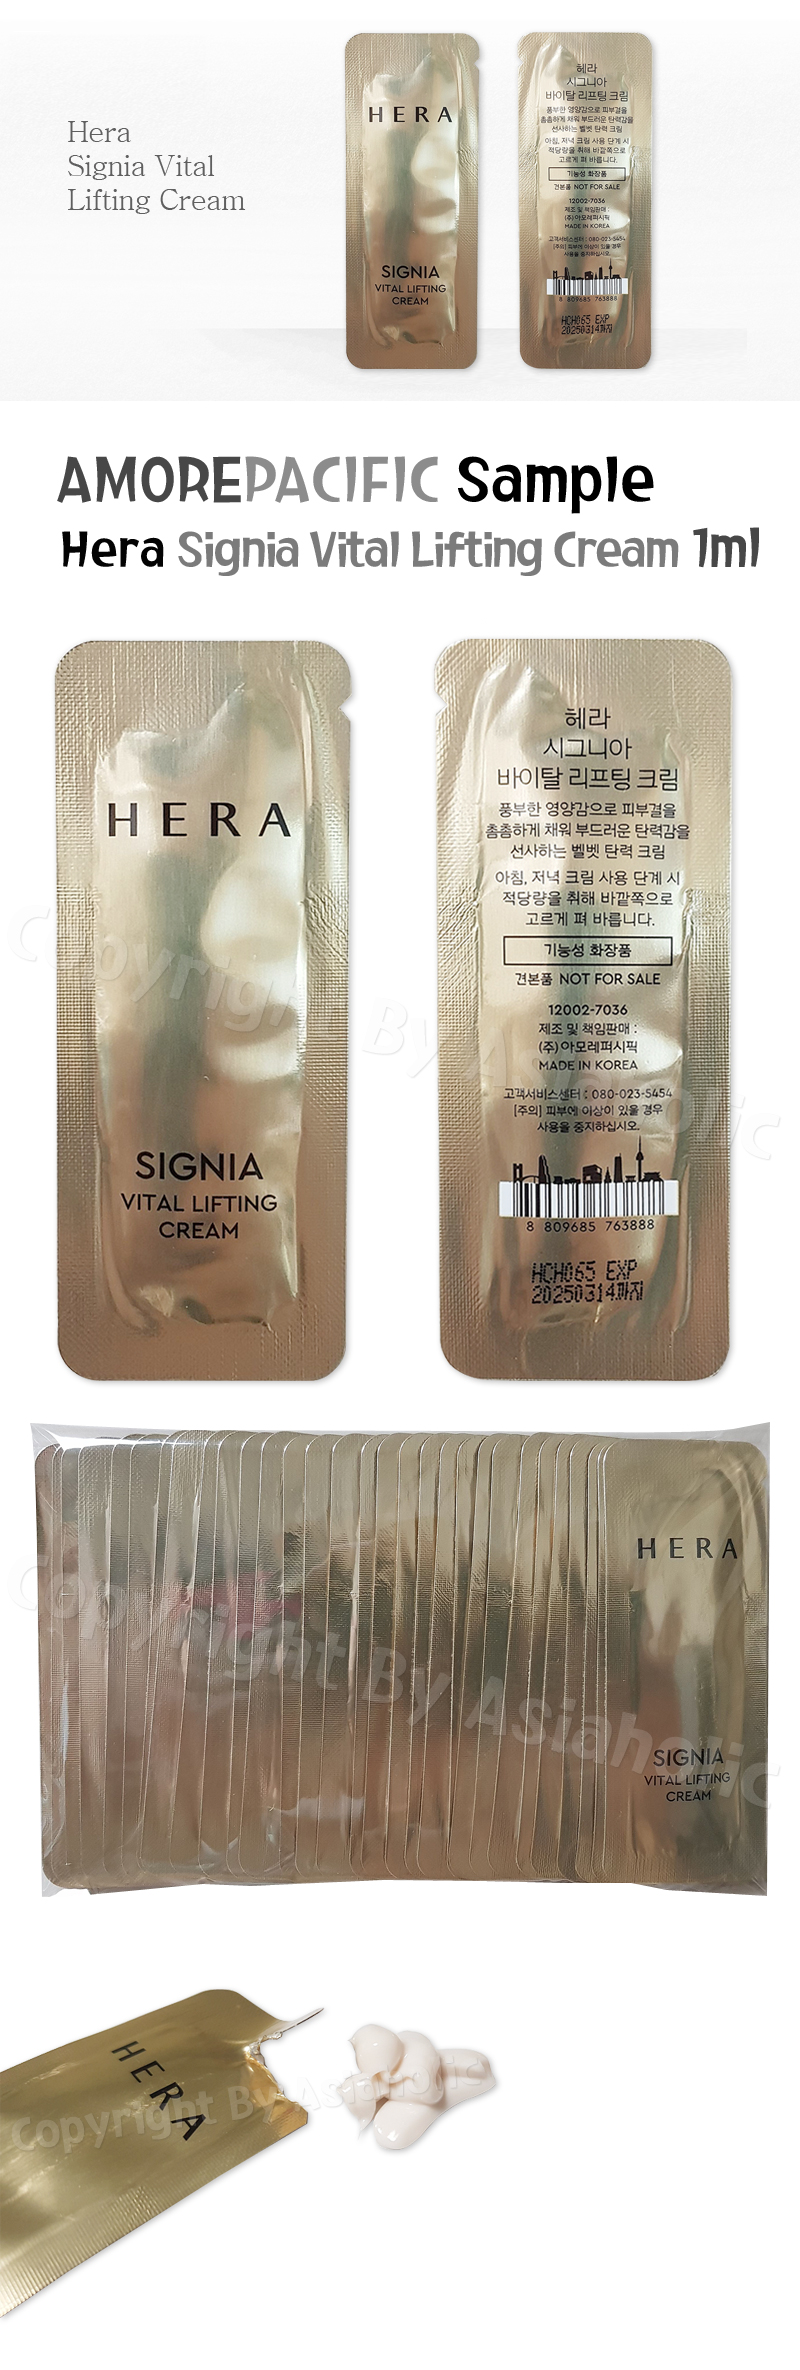 HERA Signia Vital Lifting Cream 1ml x 30pcs (30ml) Sample Newest Version